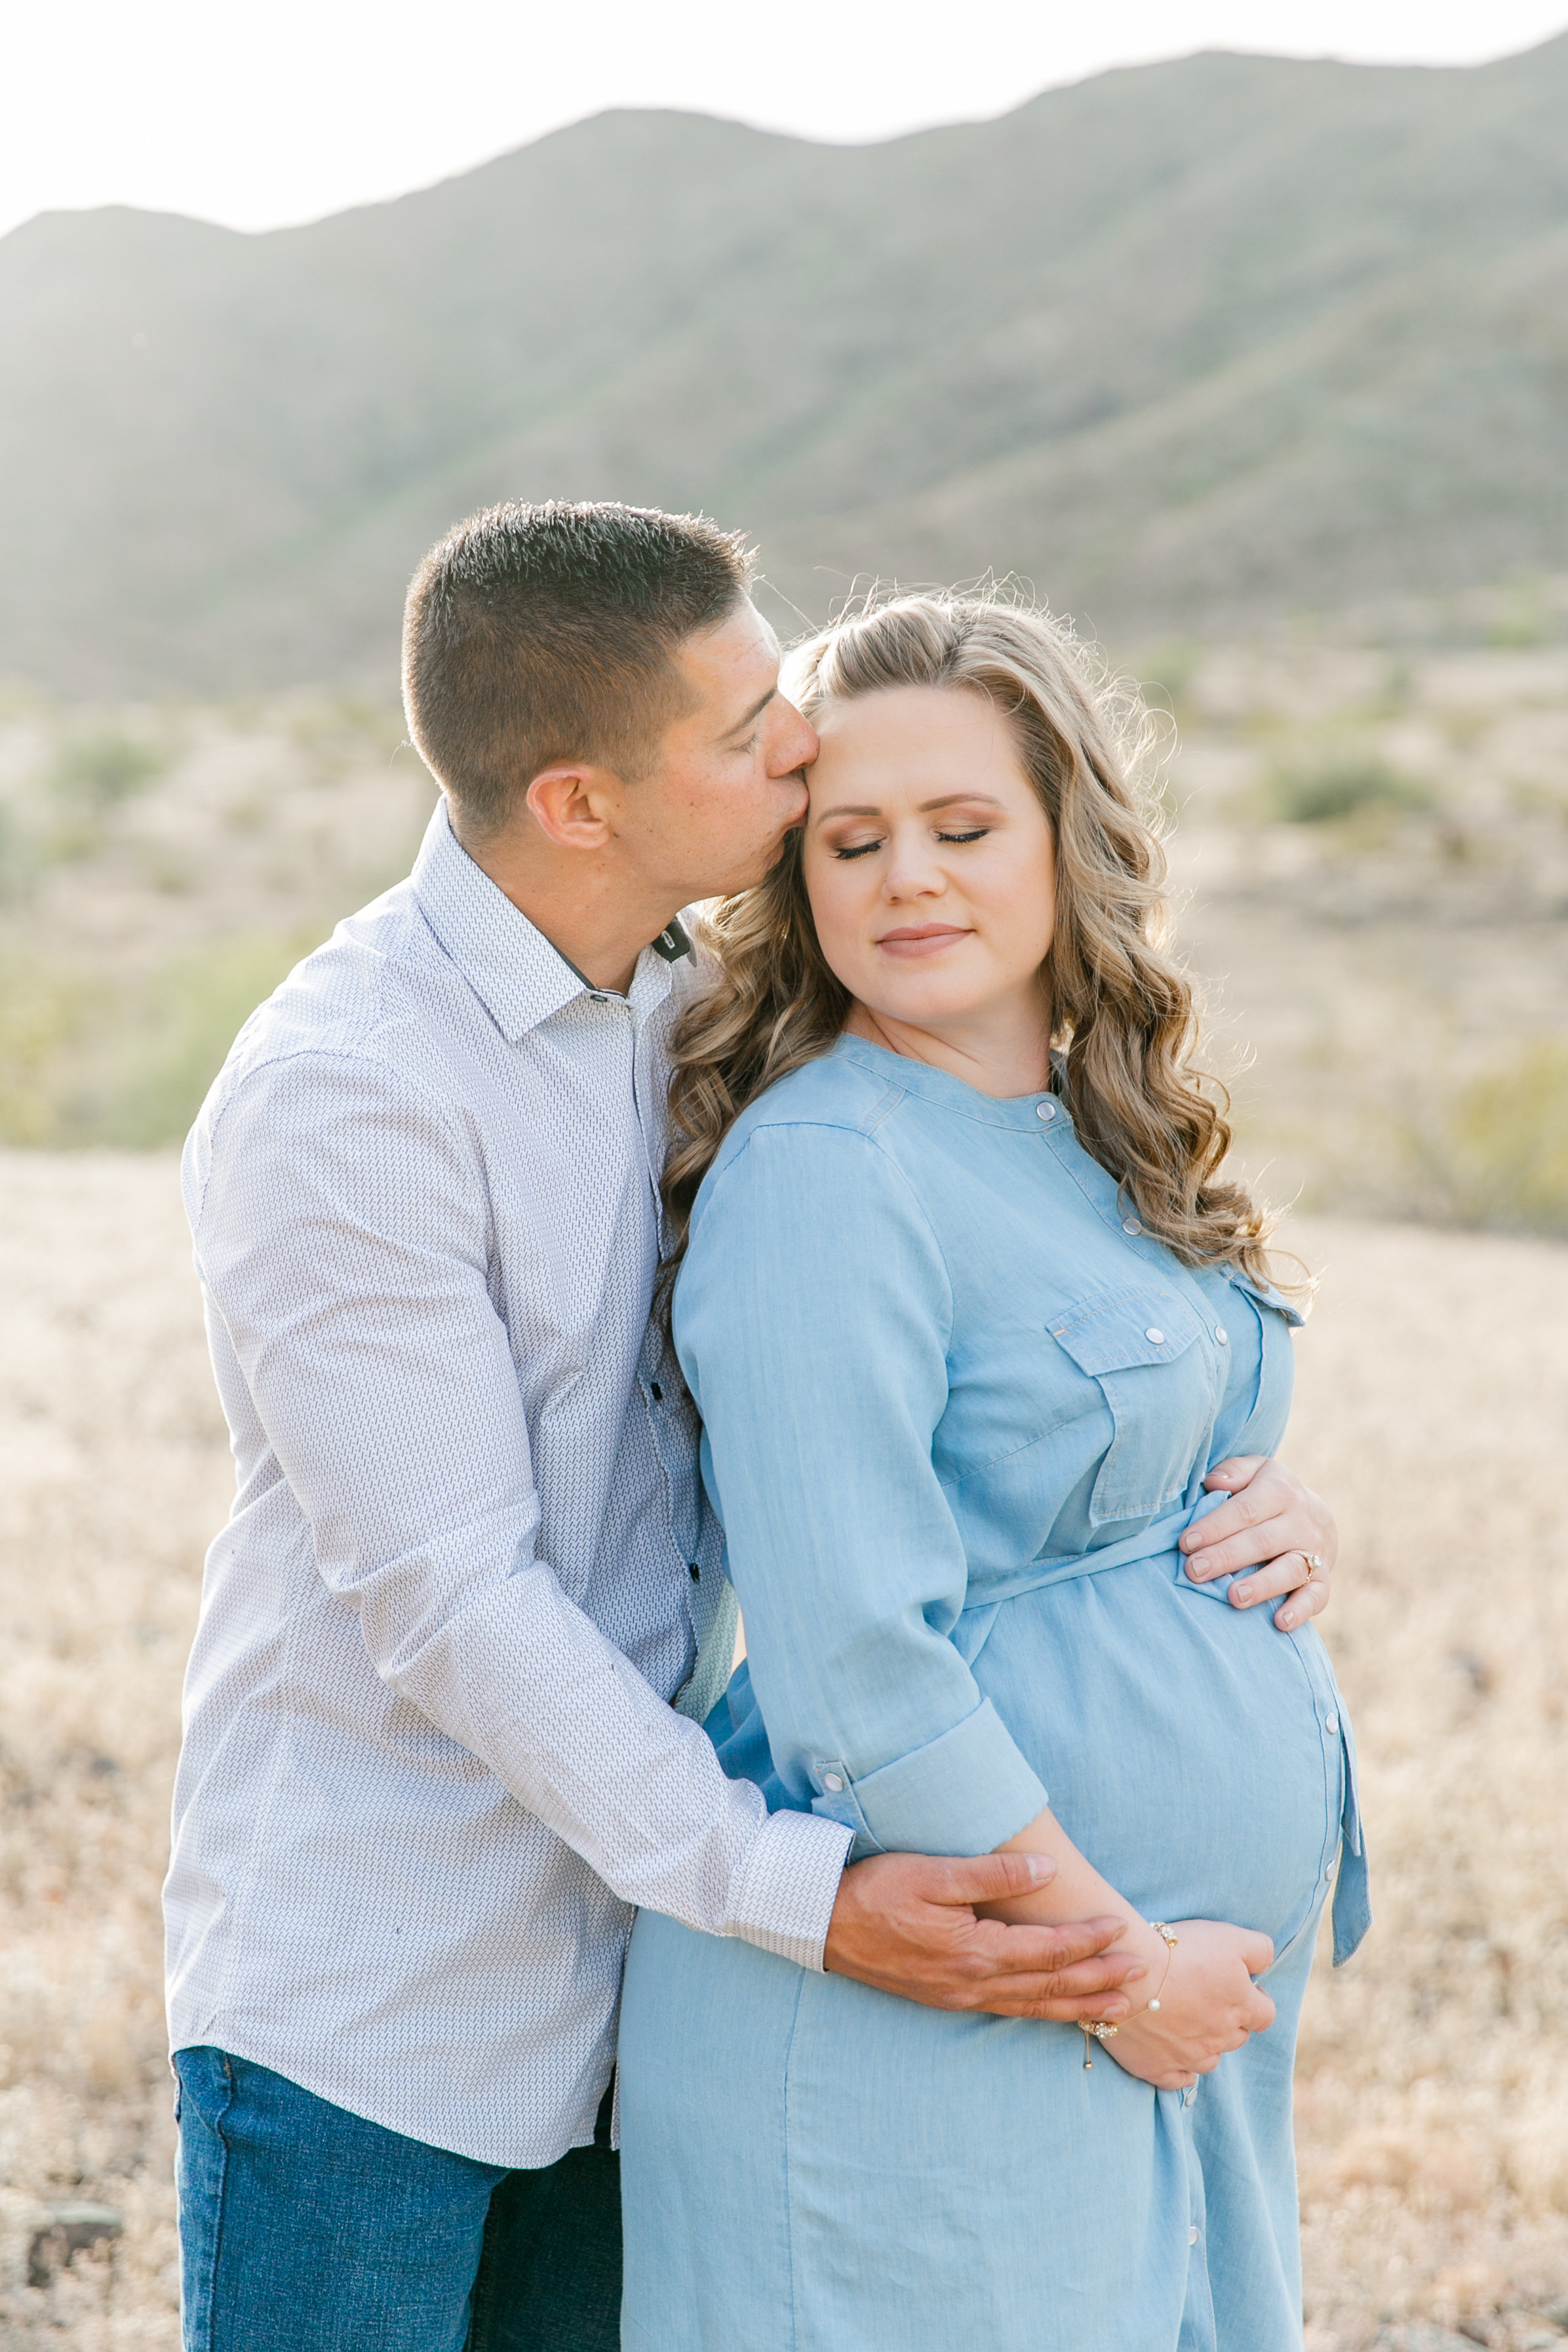 Karlie Colleen Photography - Arizona Maternity Photography-8